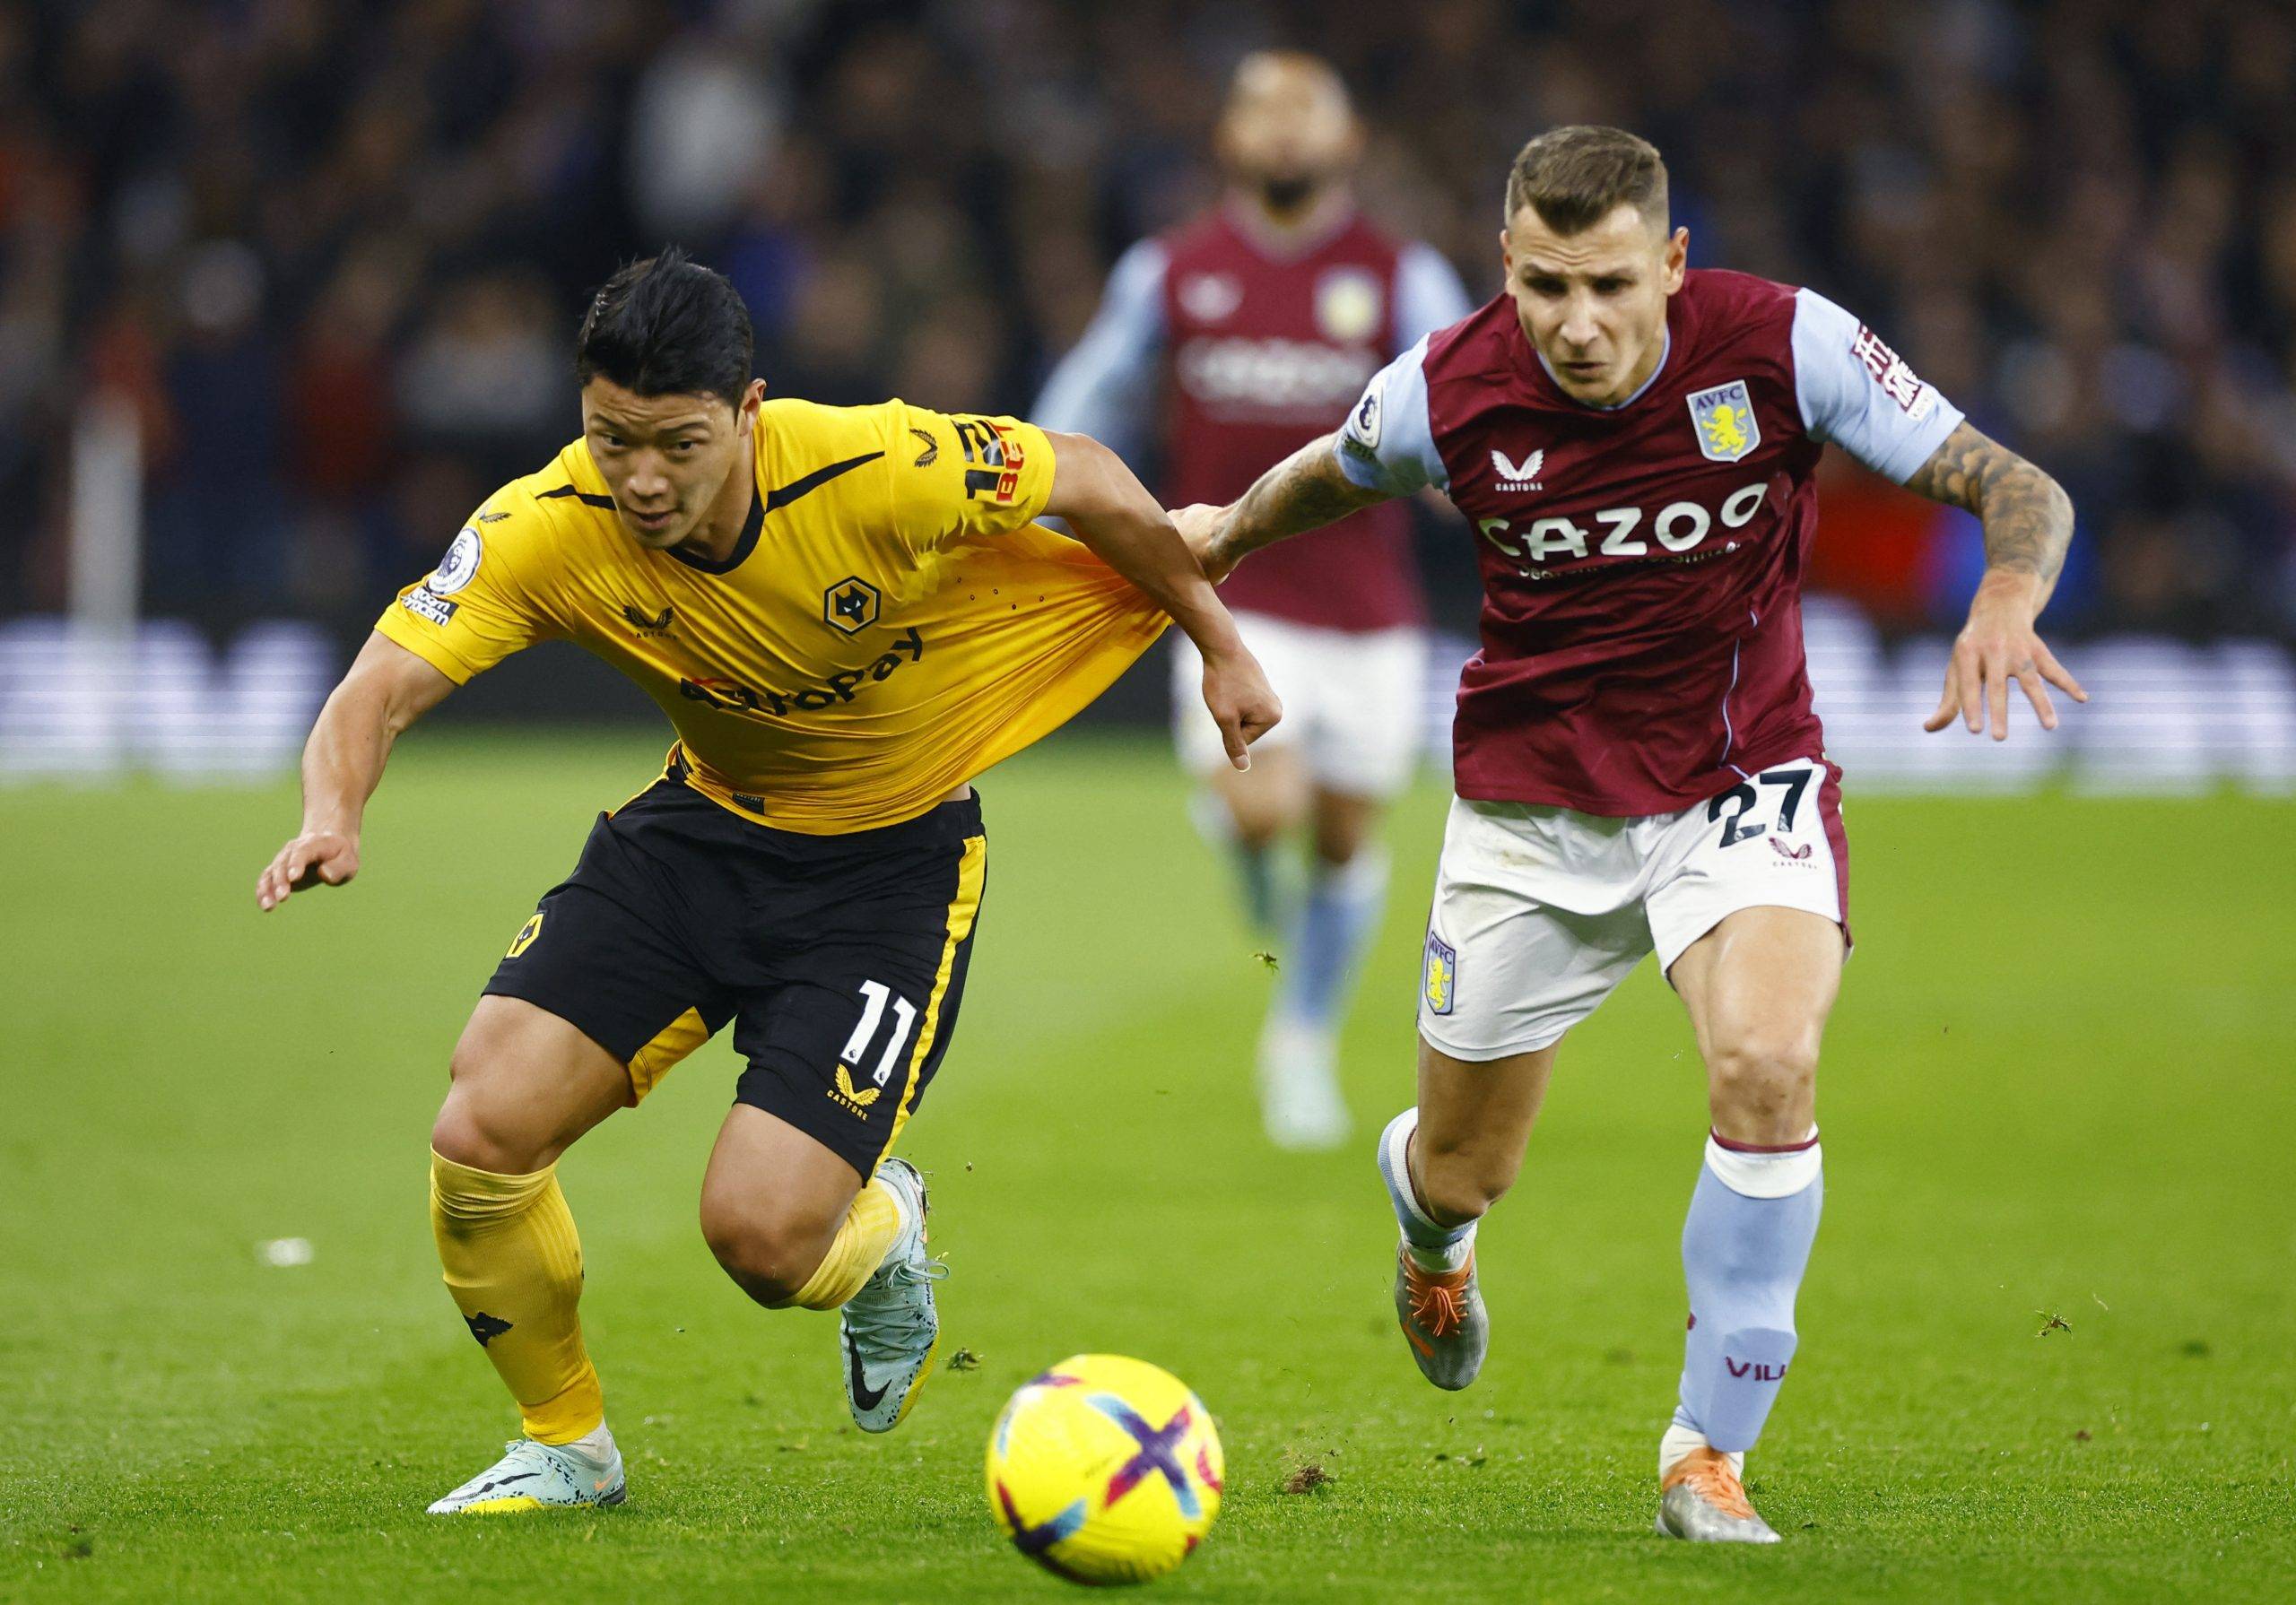 Aston Villa: Lucas Digne's future at Villa Park in doubt - Aston Villa News